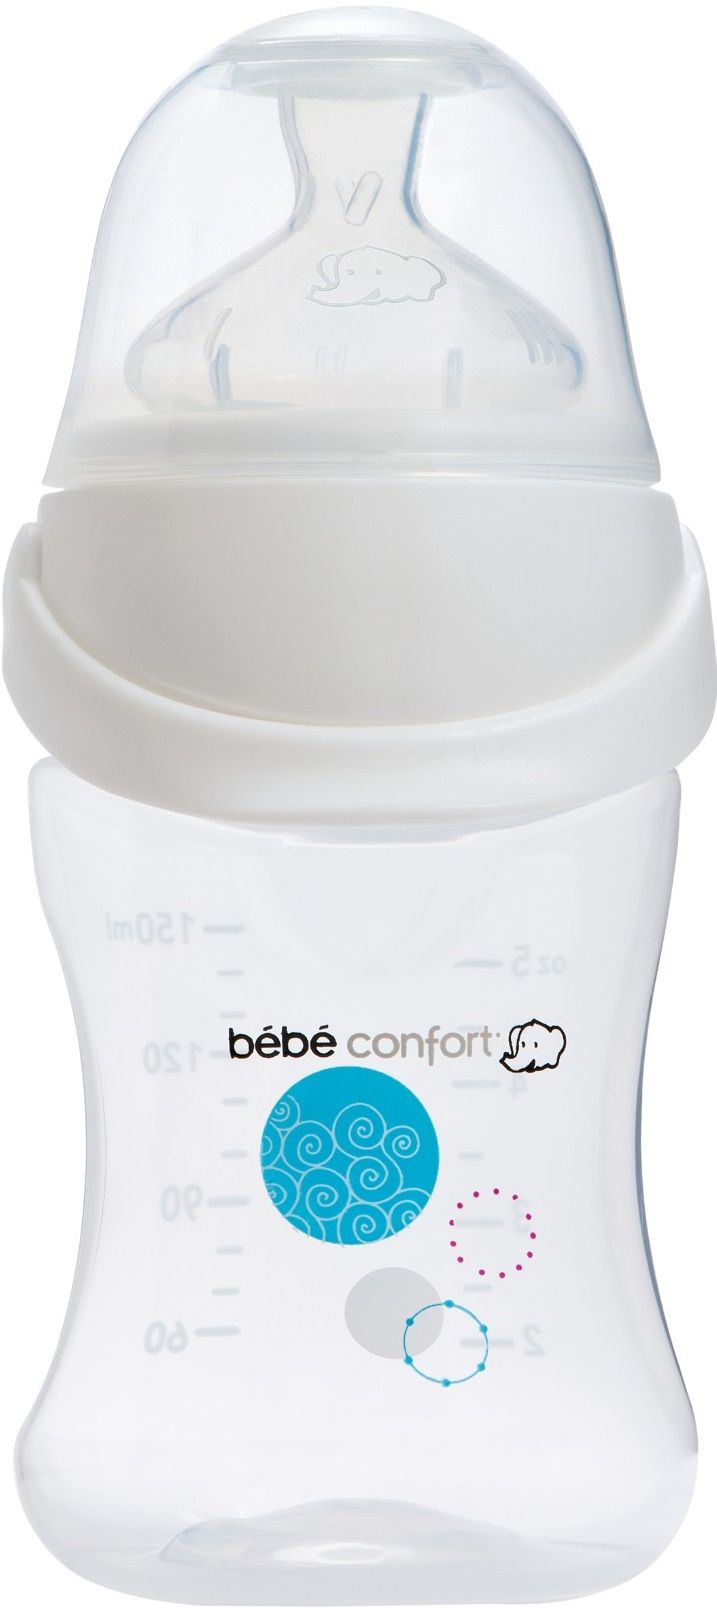 Bebe Confort Бутылочка для кормления Easy Clip, 150 мл